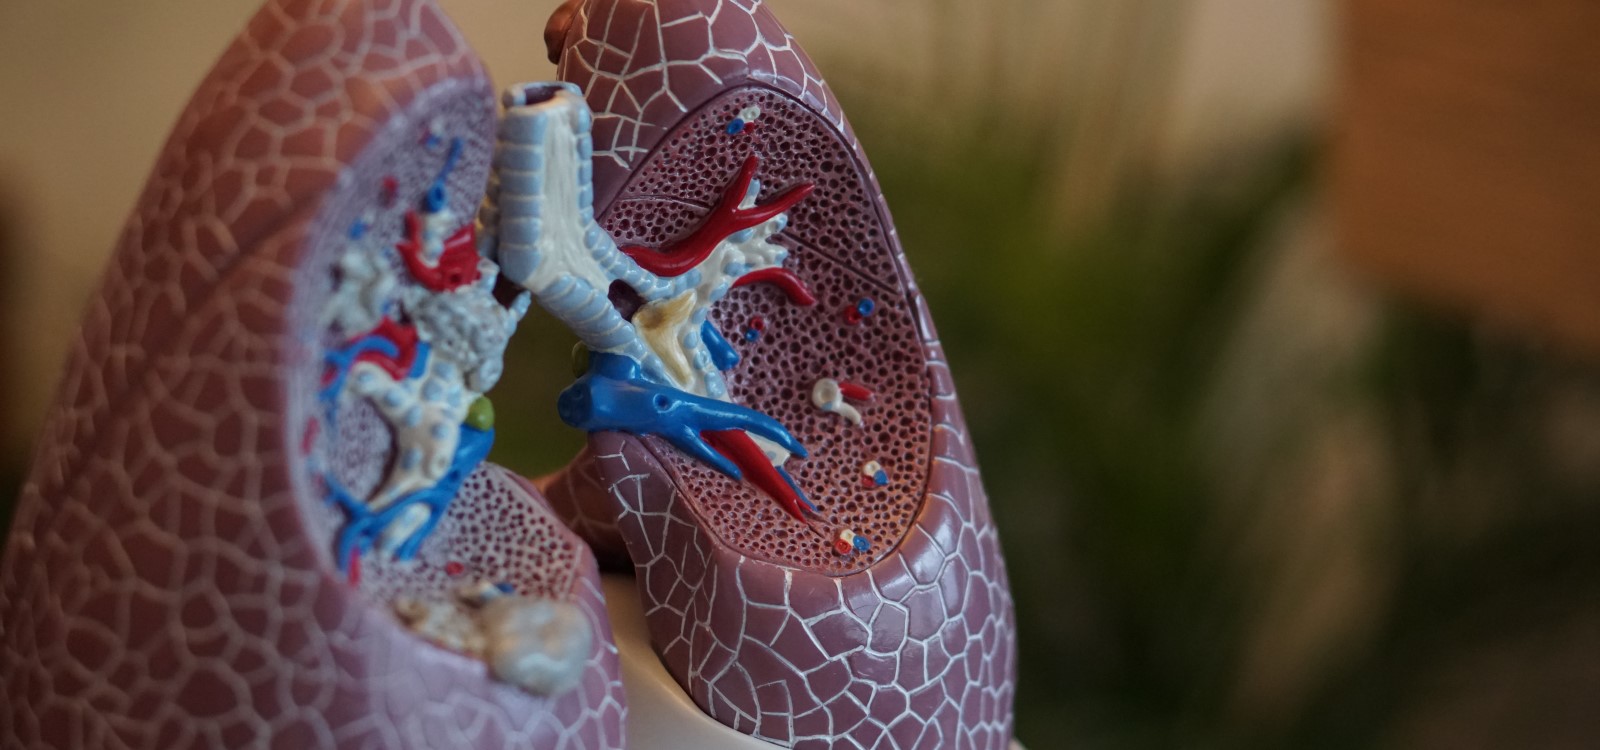 replica of human lungs